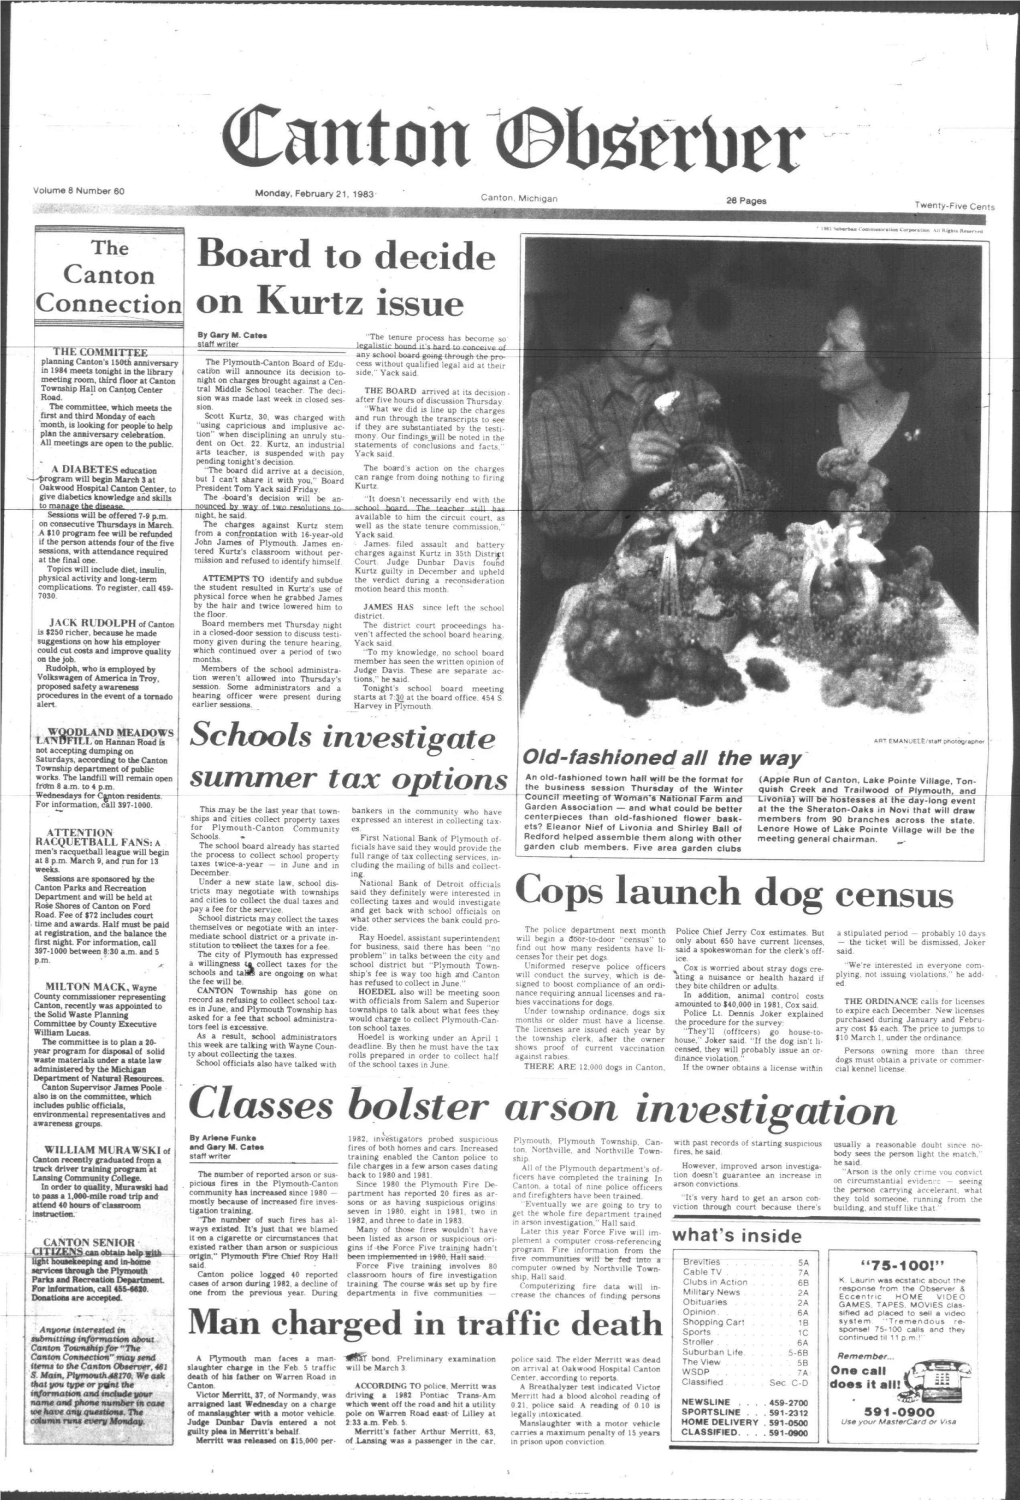 Canton Observer for February 21, 1983